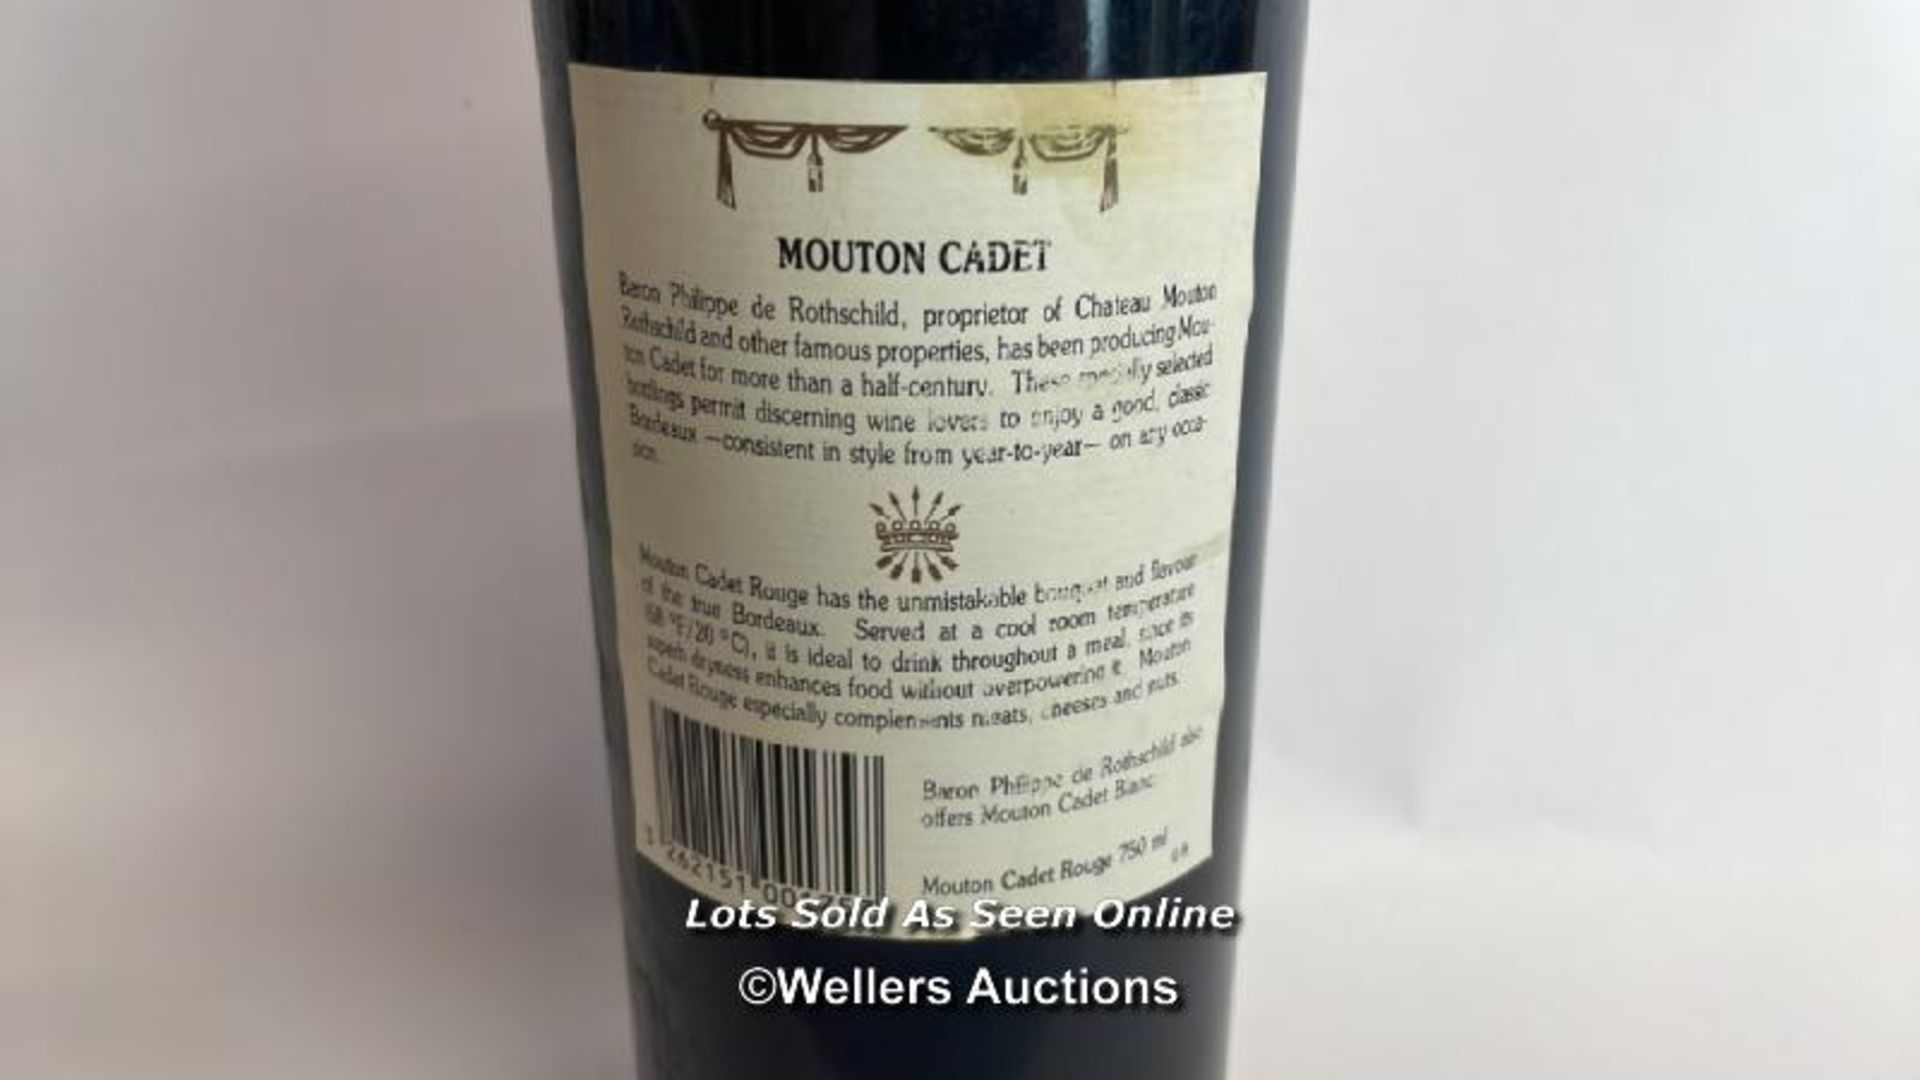 1983 Baron Phillippe De Rothschild Mouton Cadet Bordeaux, 75cl, No vol indicated / Please see images - Image 4 of 4